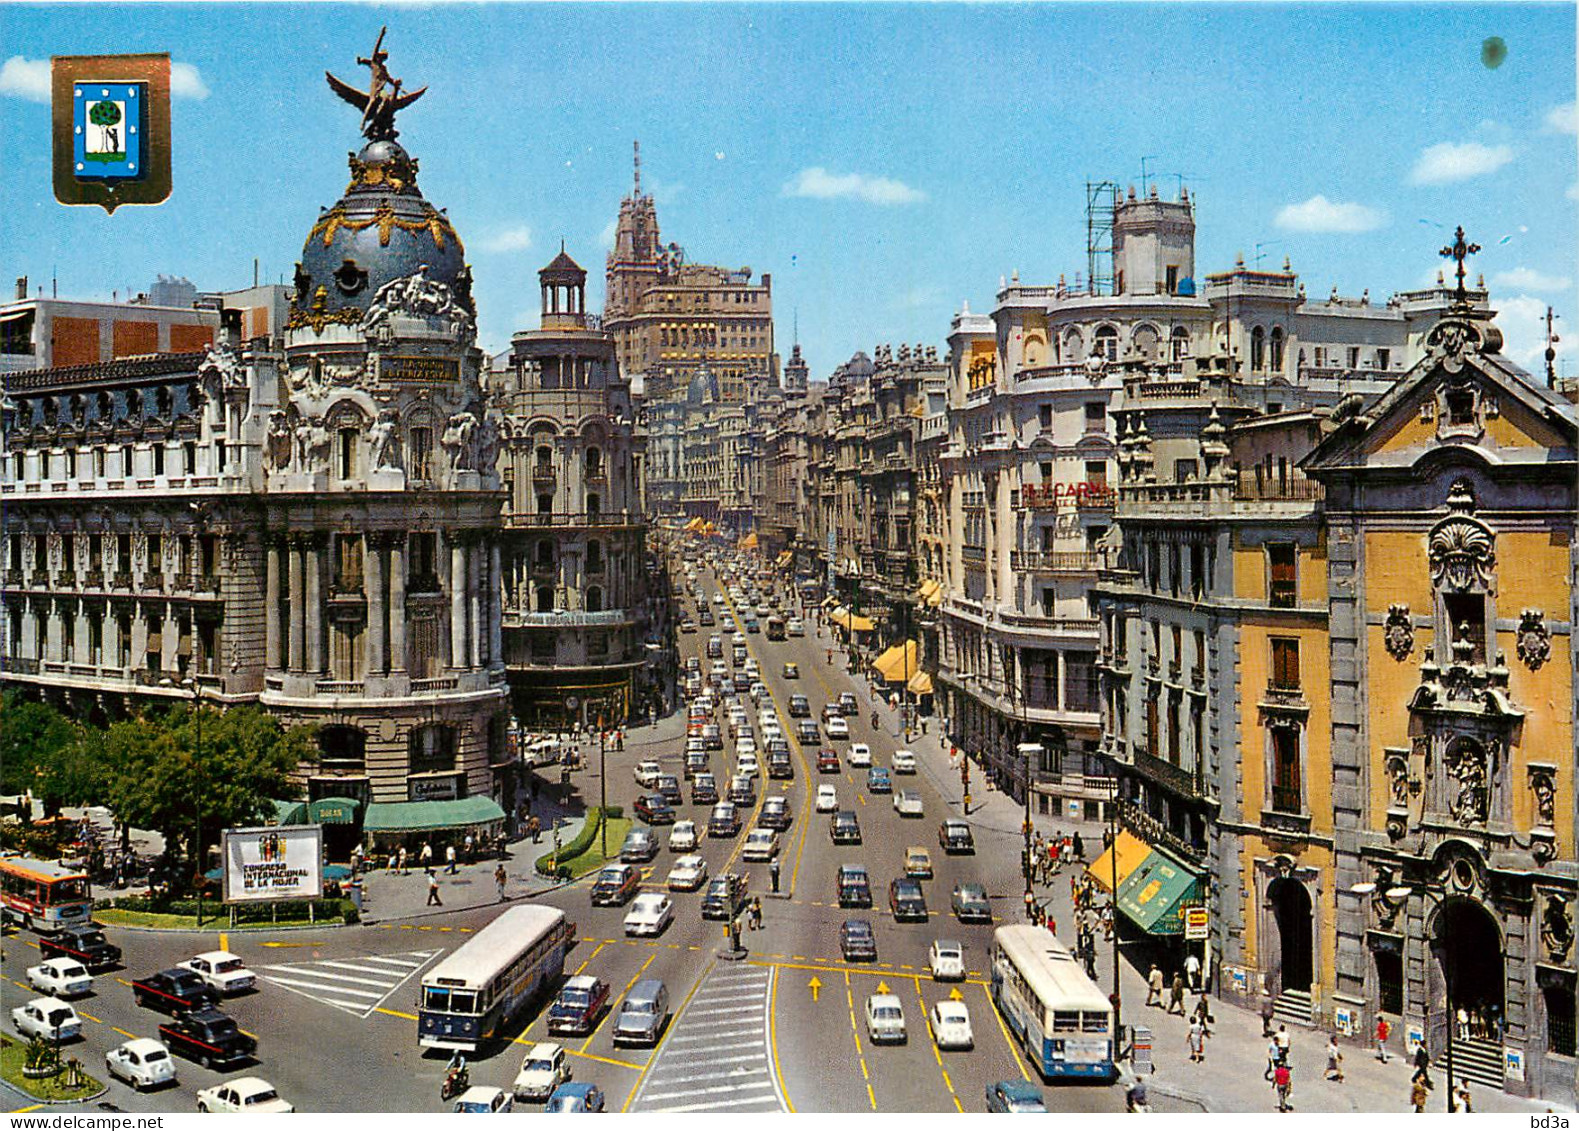  AUTOMOBILES MADRID - Turismo